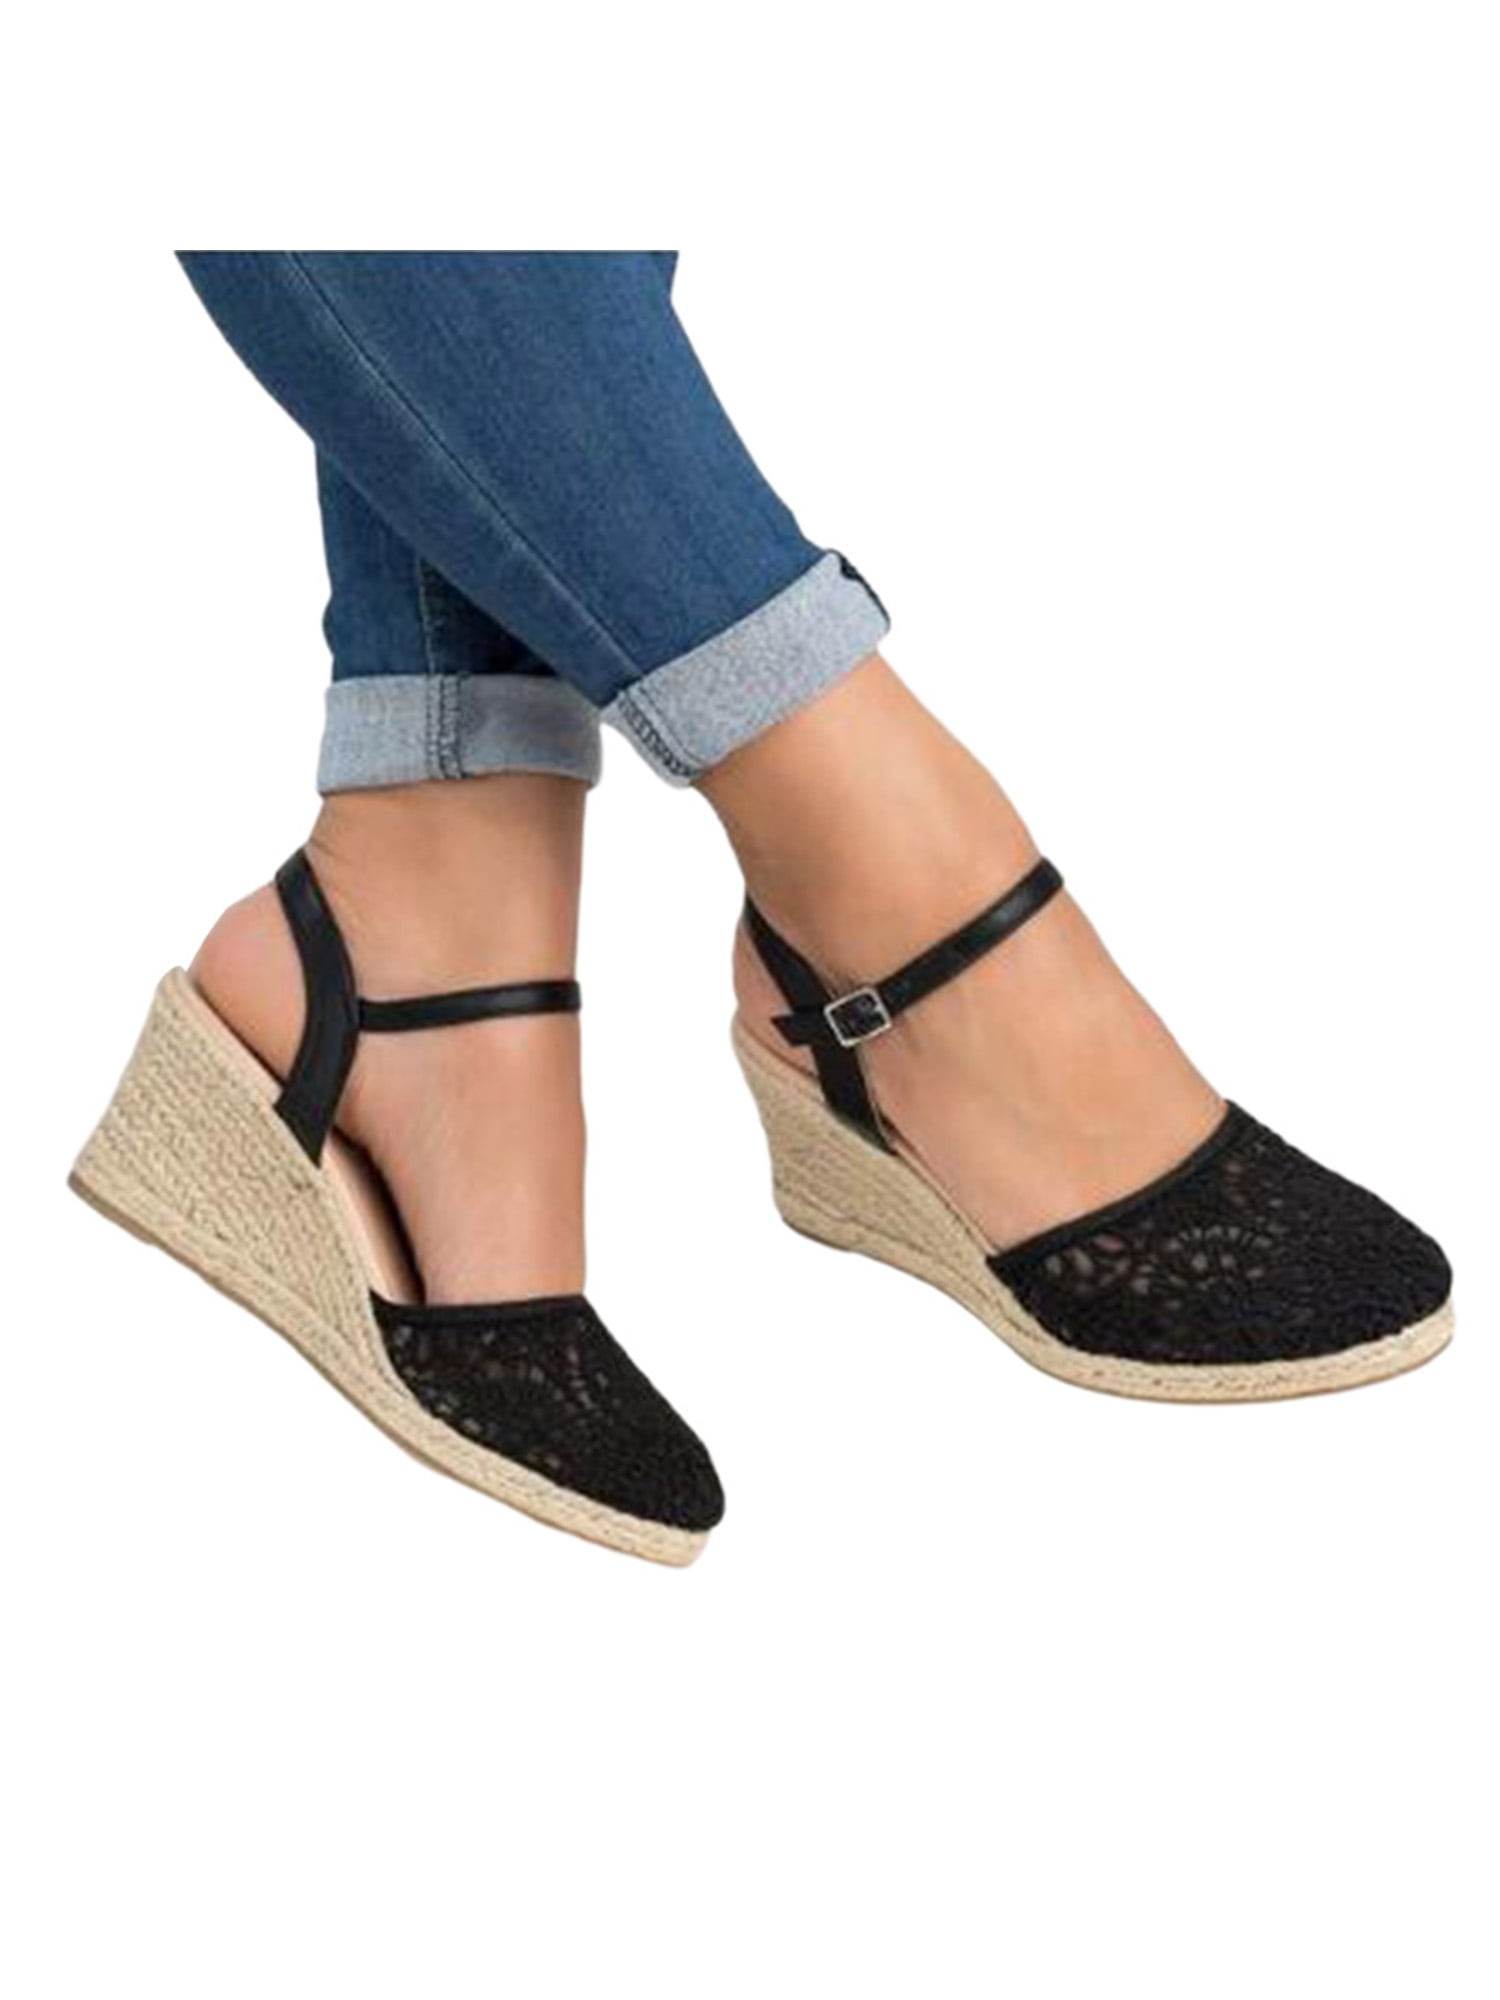 Womens Summer Sandals Flat Wedge Ladies Platform Espadrille Ankle Strap Shoes 